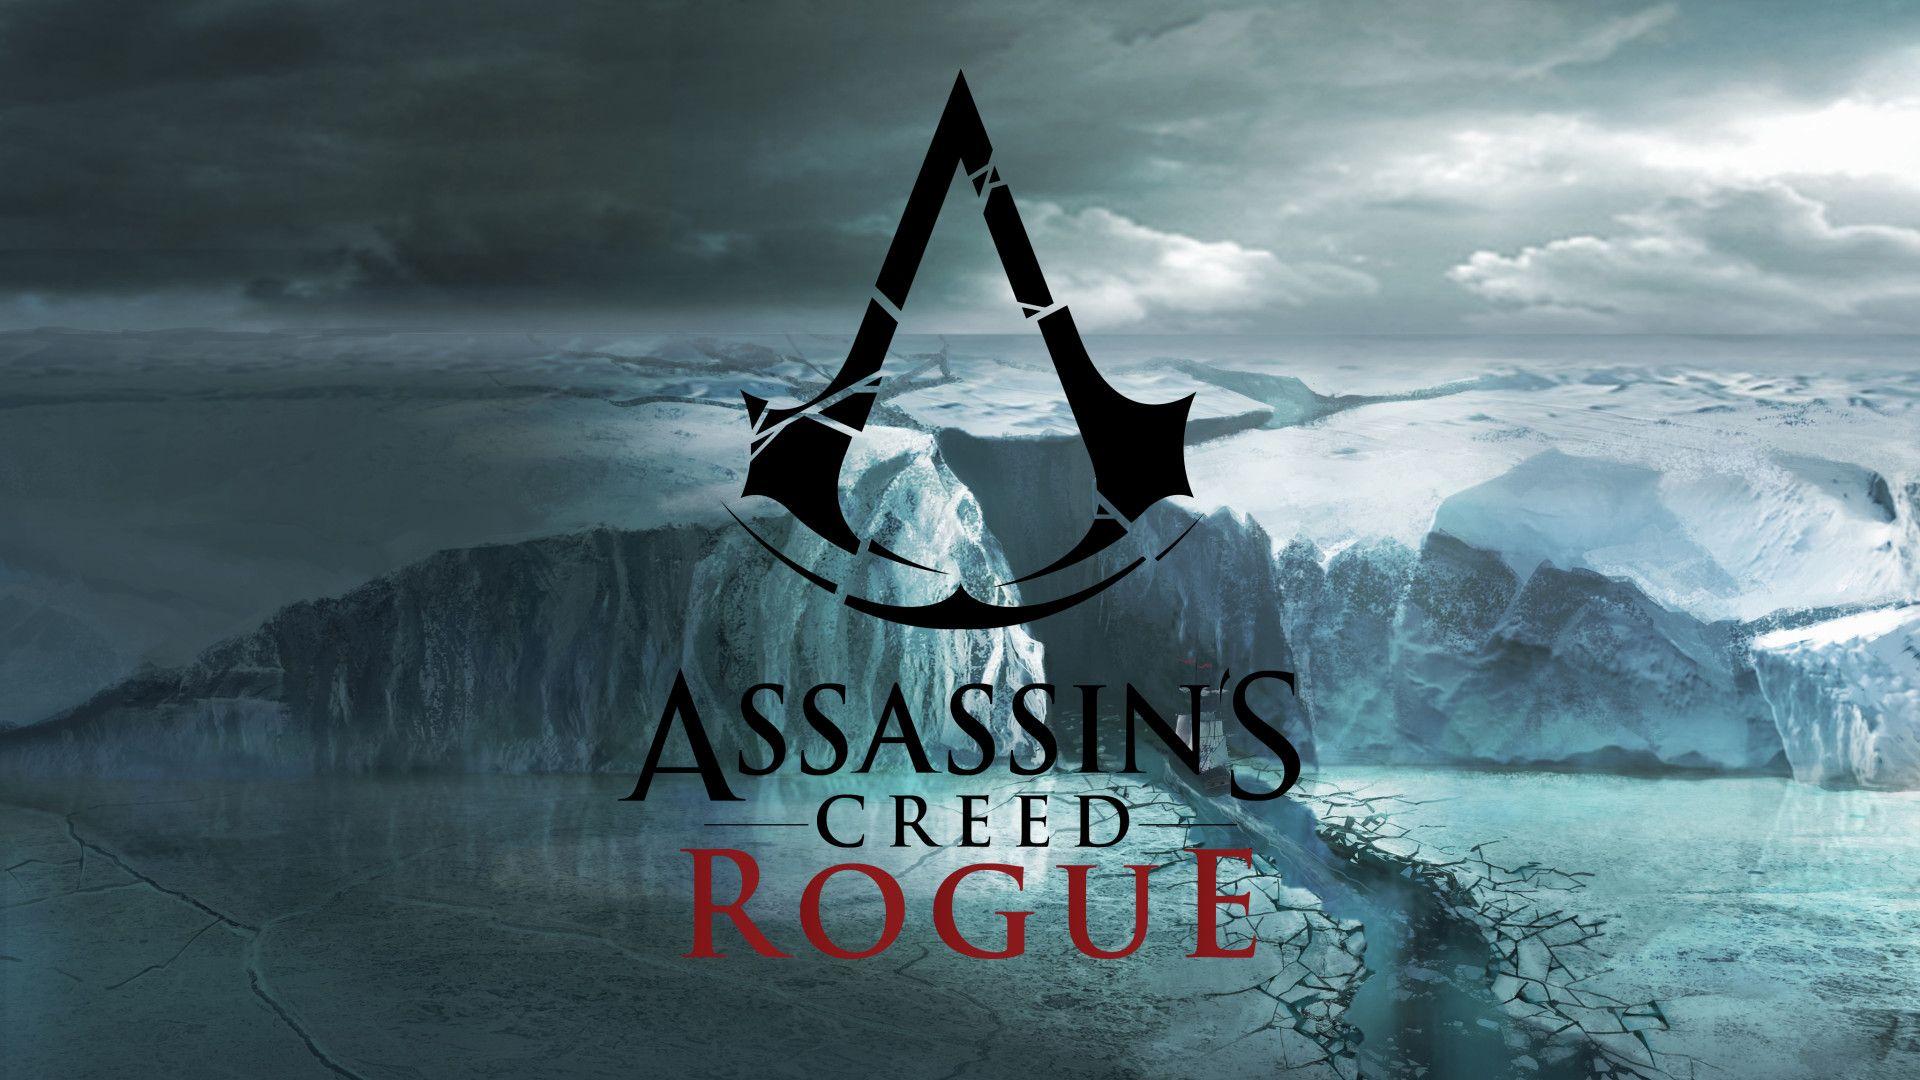 Assassin's Creed Rogue Wallpaper. Assassins Creed Rogue Jeux